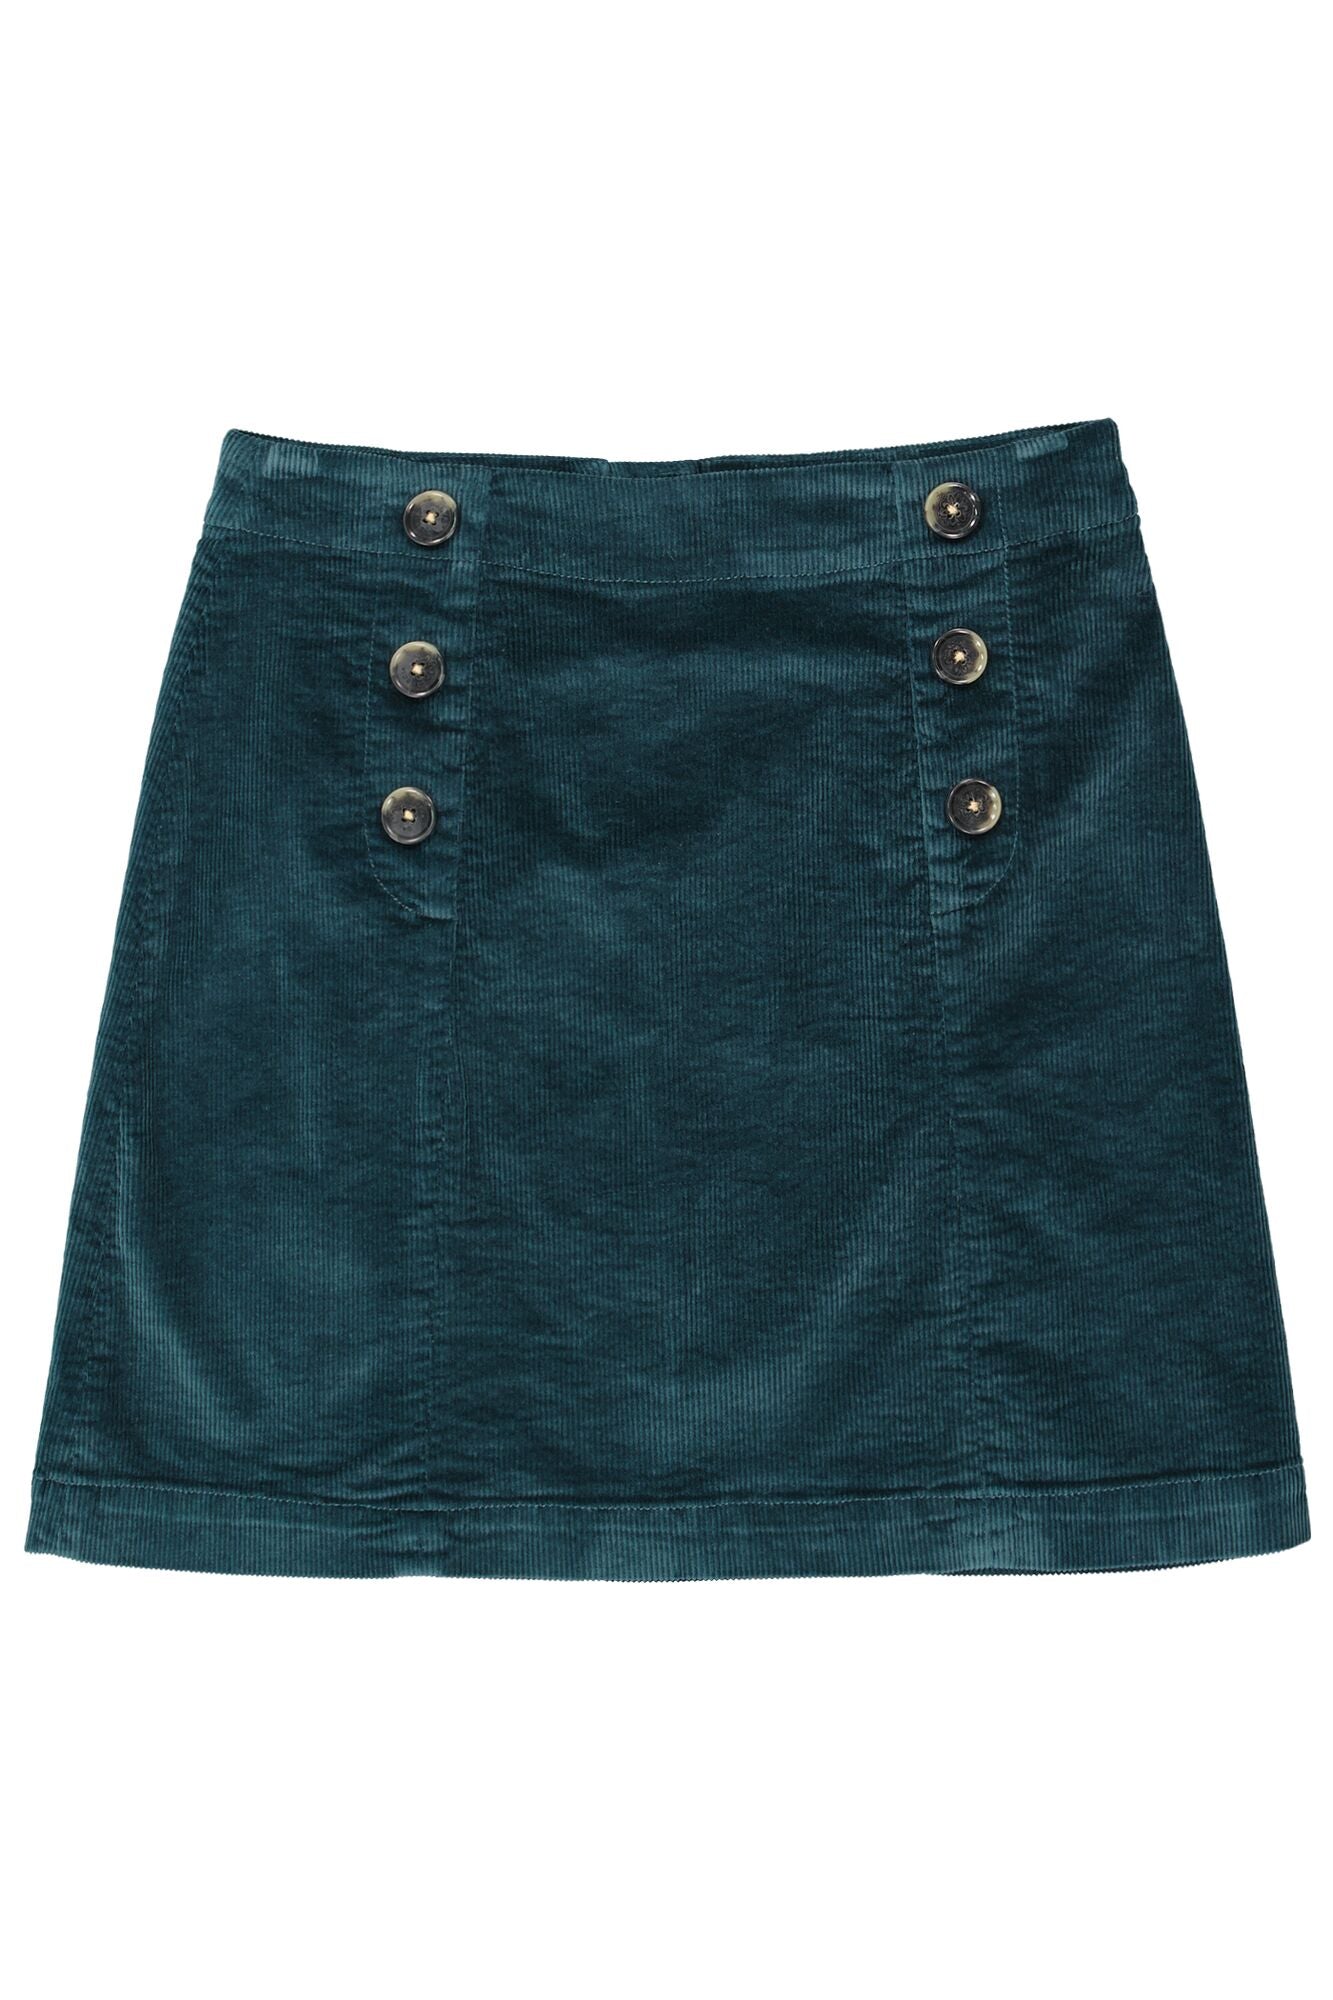 GARCIA Teal Corduroy Mini Skirt